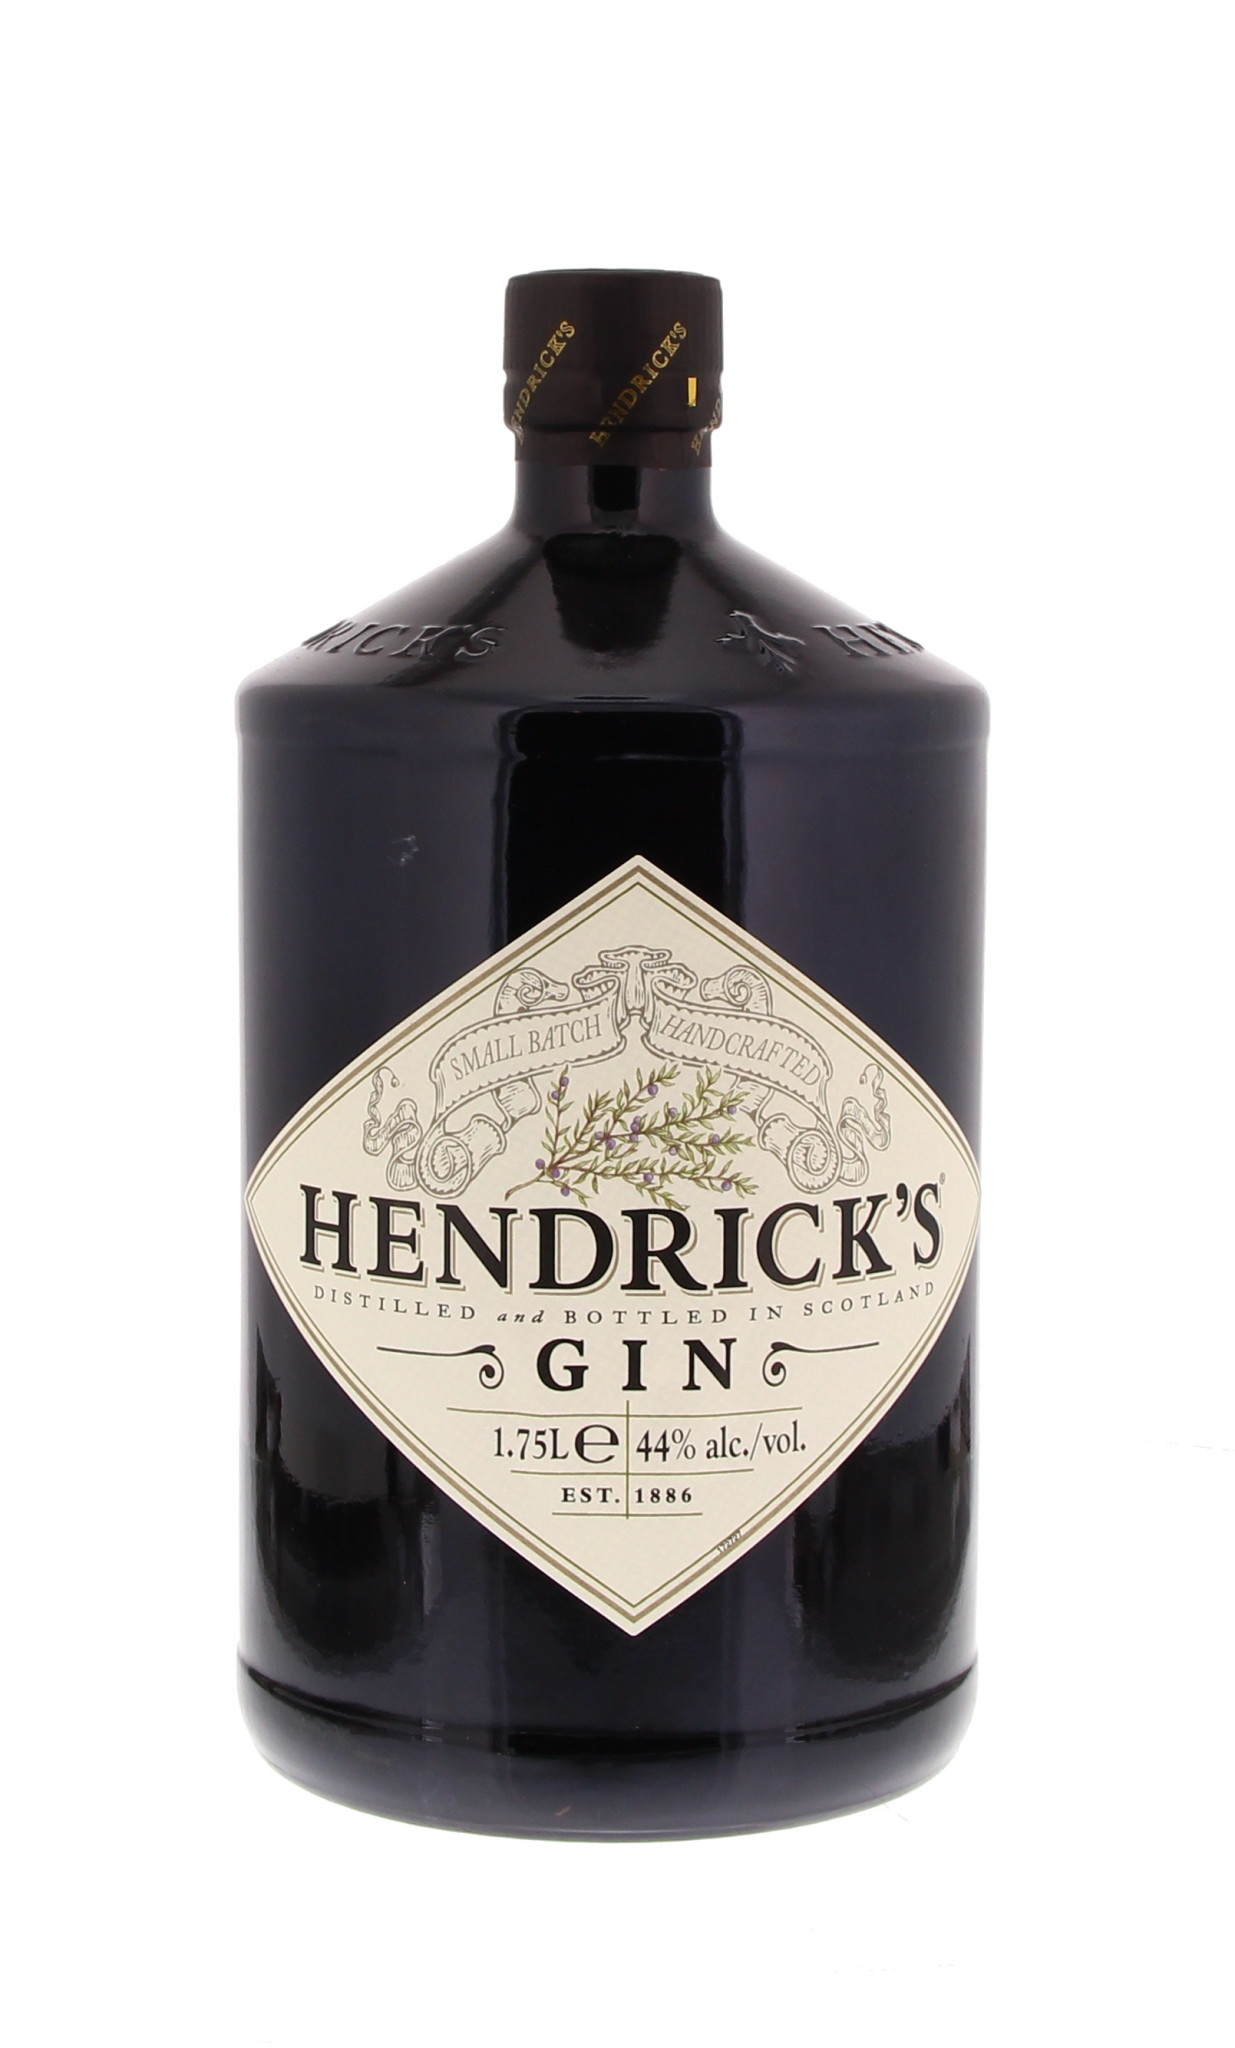 Achetez du gin Hendrick's en ligne sur Flavor Shop - Celebrating Taste